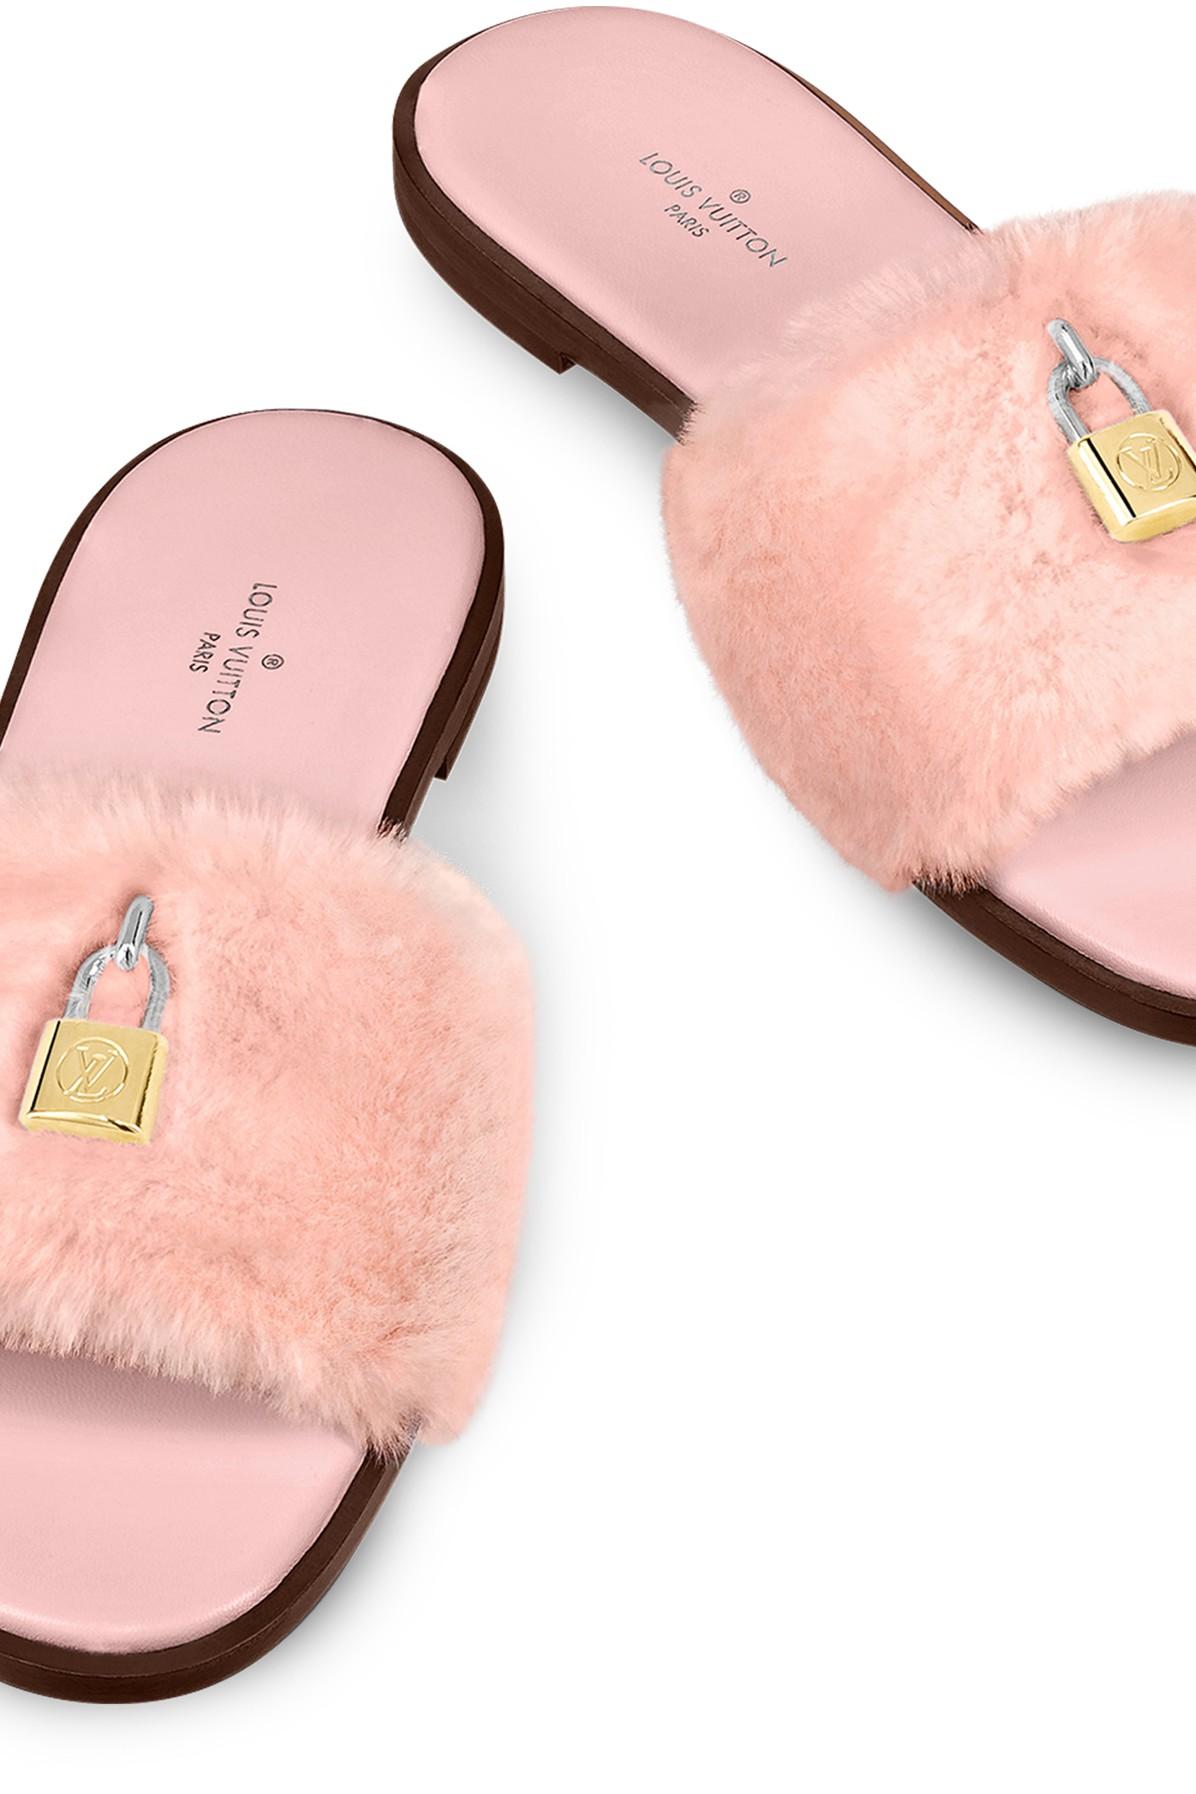 Louis Vuitton Pink Mink Fur Lock It Flat Slides